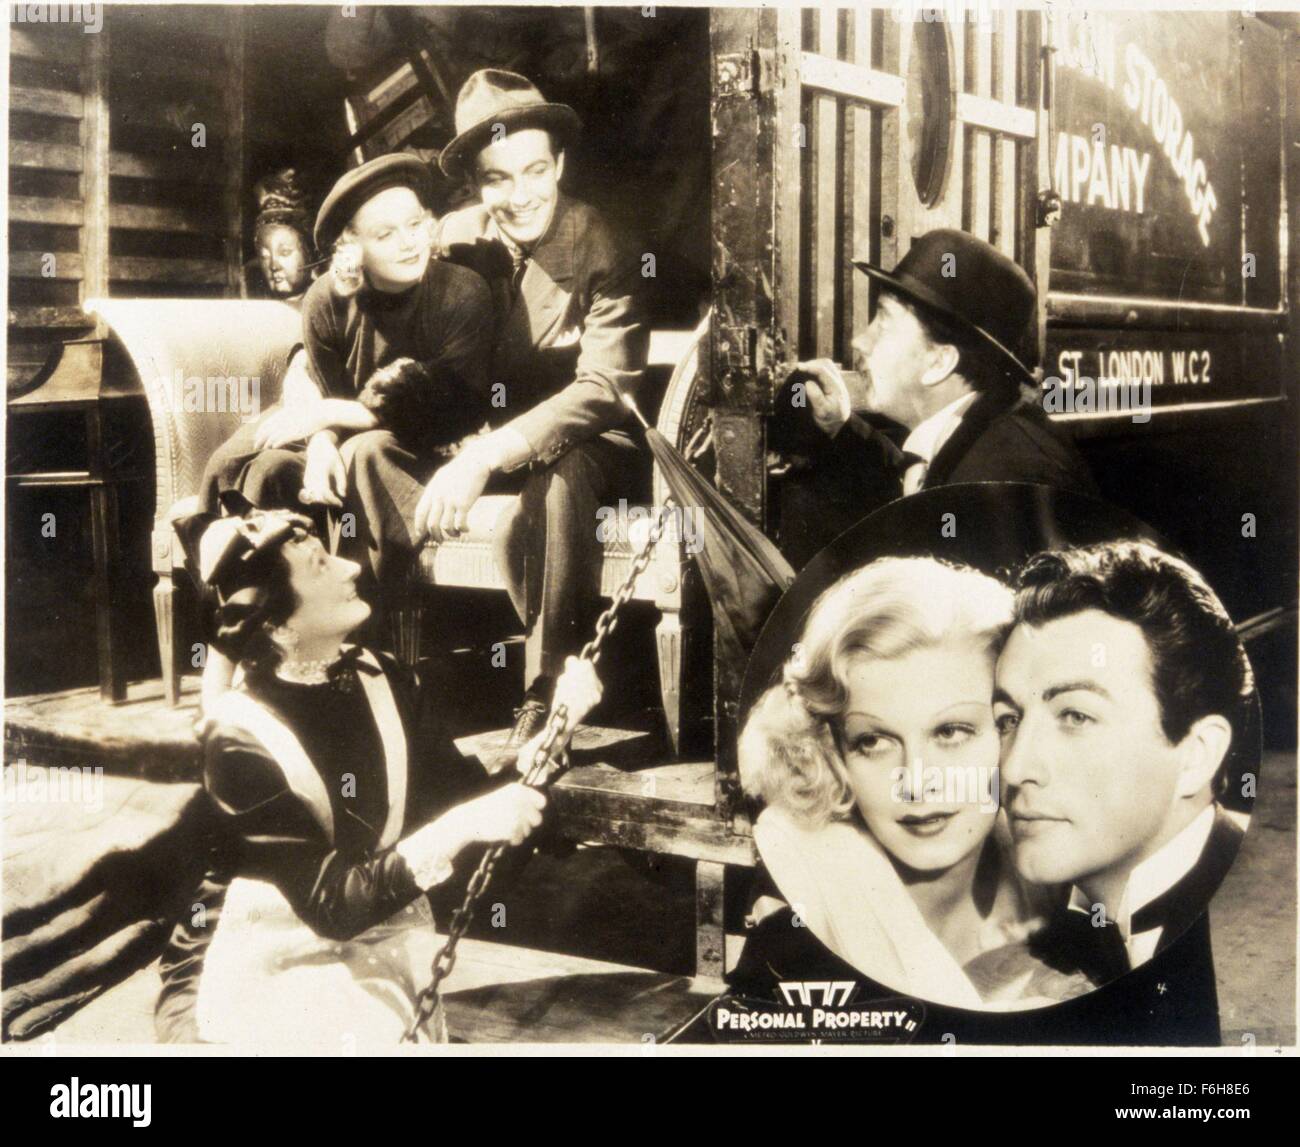 1937, Film Title: PERSONAL PROPERTY, Director: W S VAN DYKE, Studio: MGM, Pictured: ENSEMBLE, JEAN HARLOW, ROBERT TAYLOR, CHEEK TO CHEEK, ROMANCE, TRAVEL, TRUCK. (Credit Image: SNAP) Stock Photo